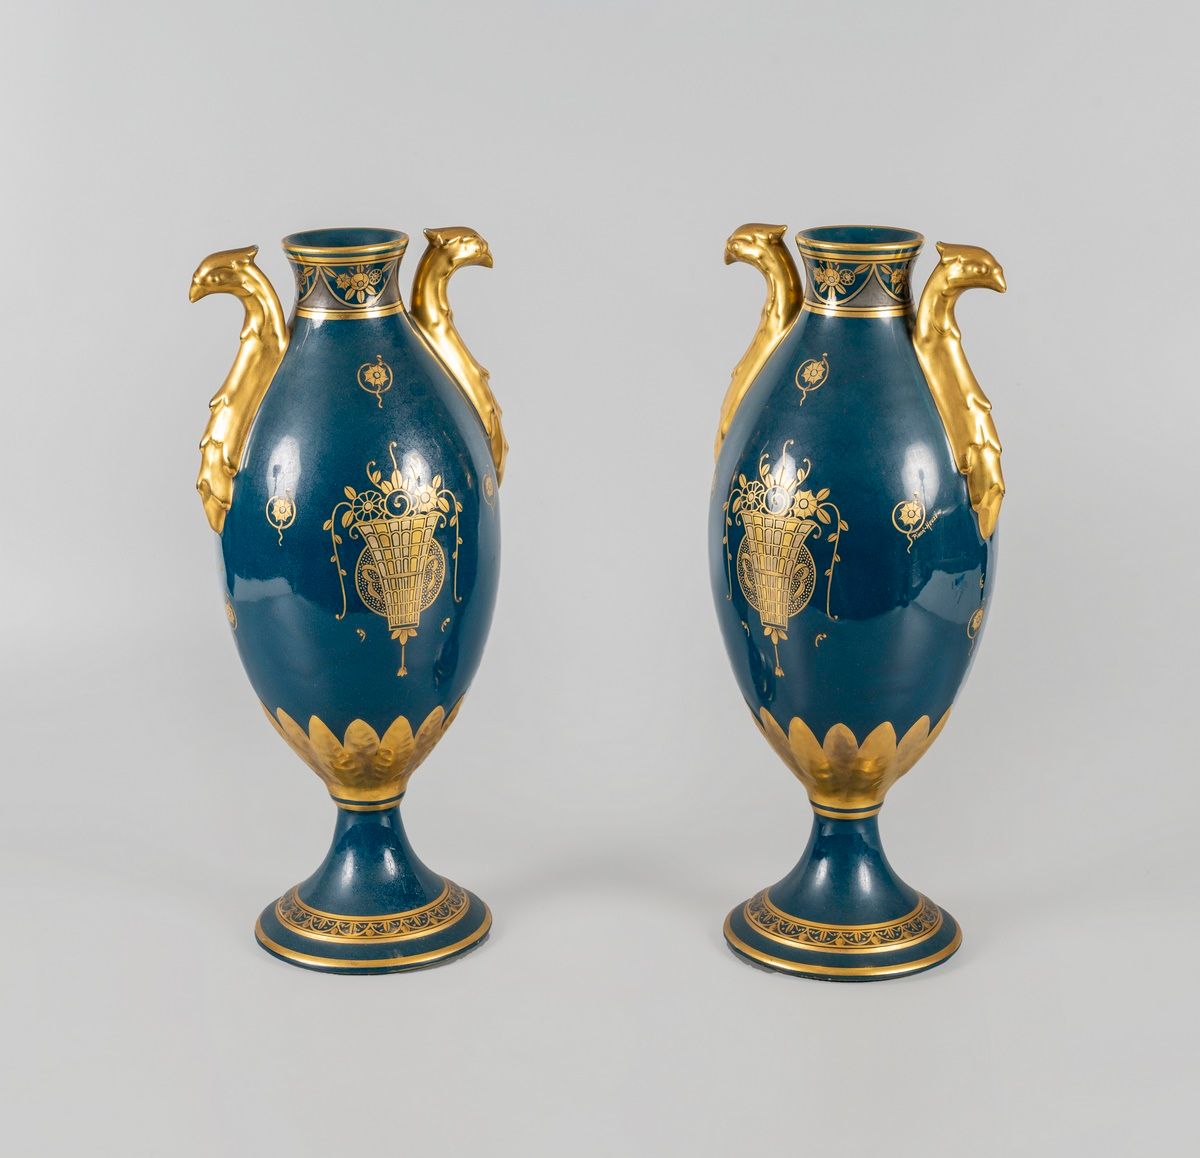 Null 图尔的JAGET ET PINON制造商

饰有花篮的青花瓷花瓶一对

背面的标记

约1910年

高：42厘米。

(镀金的磨损)